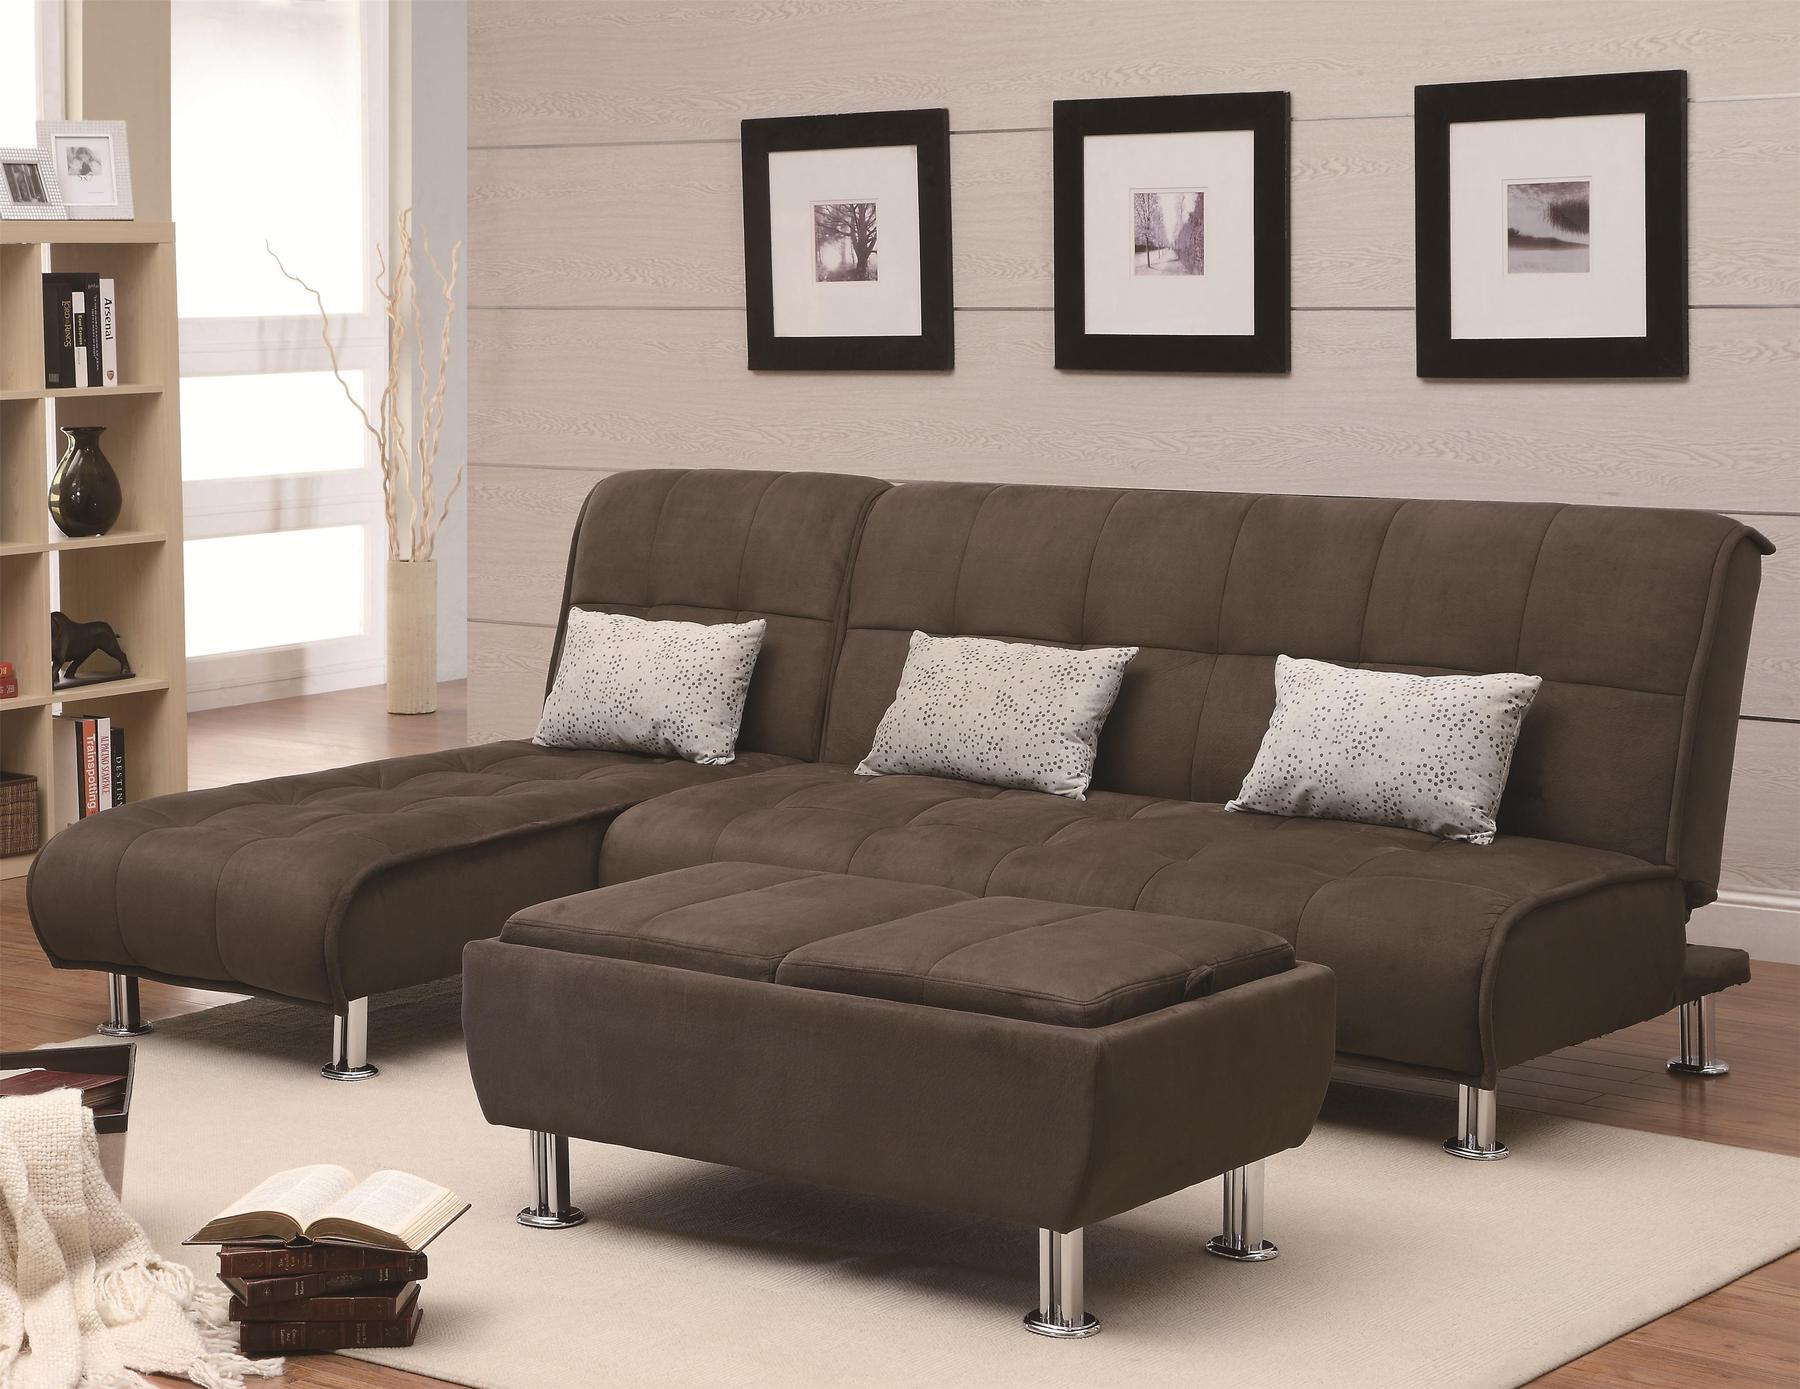 Ellwood Sofa Bed 300276 Coaster Furniture Sleeper Sofas Comfyco Furniture